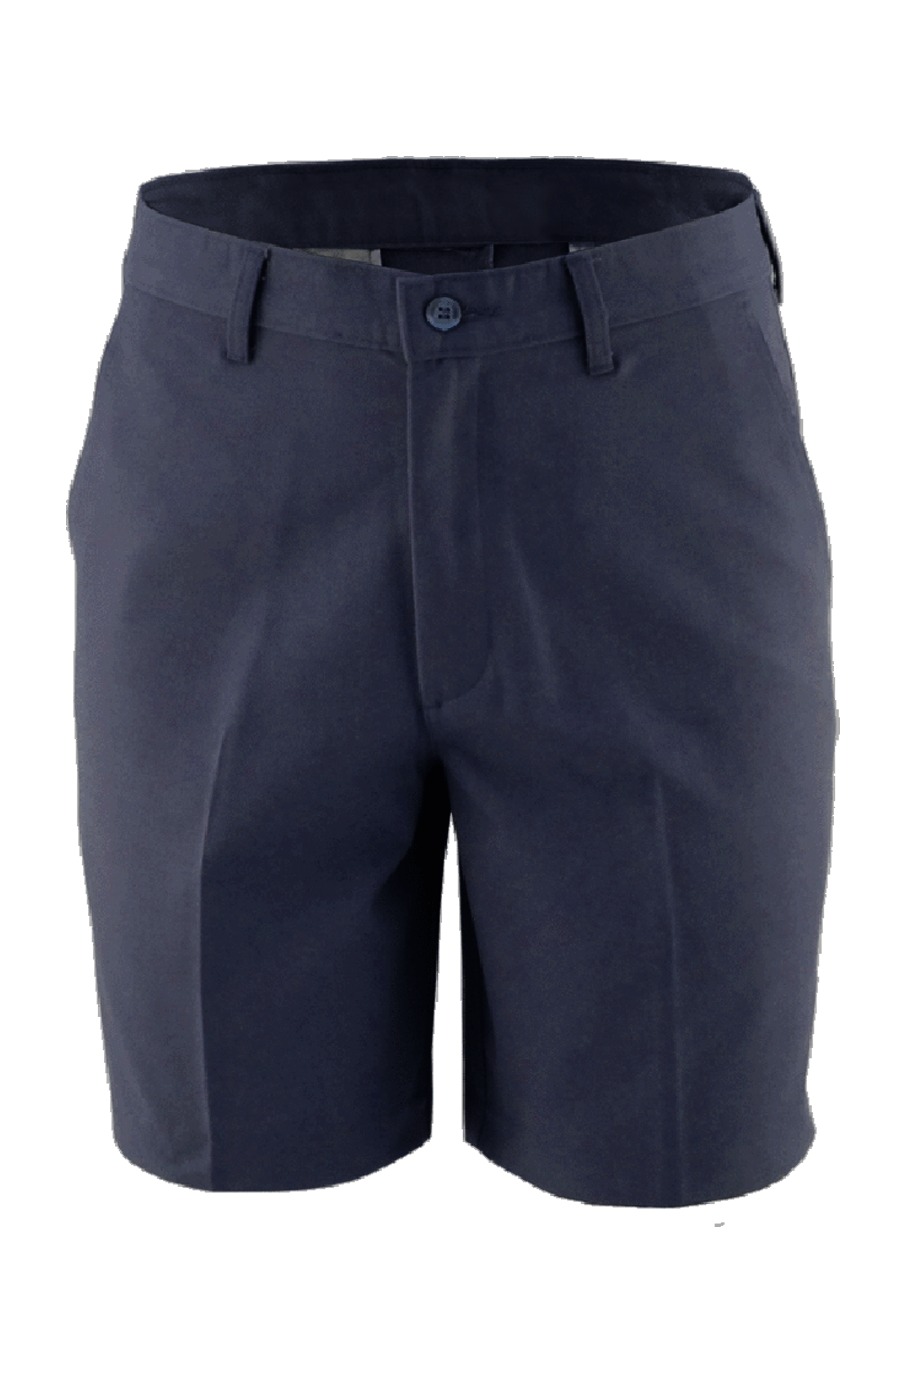 Edwards Garment 2450 - Men's Flat Front Short